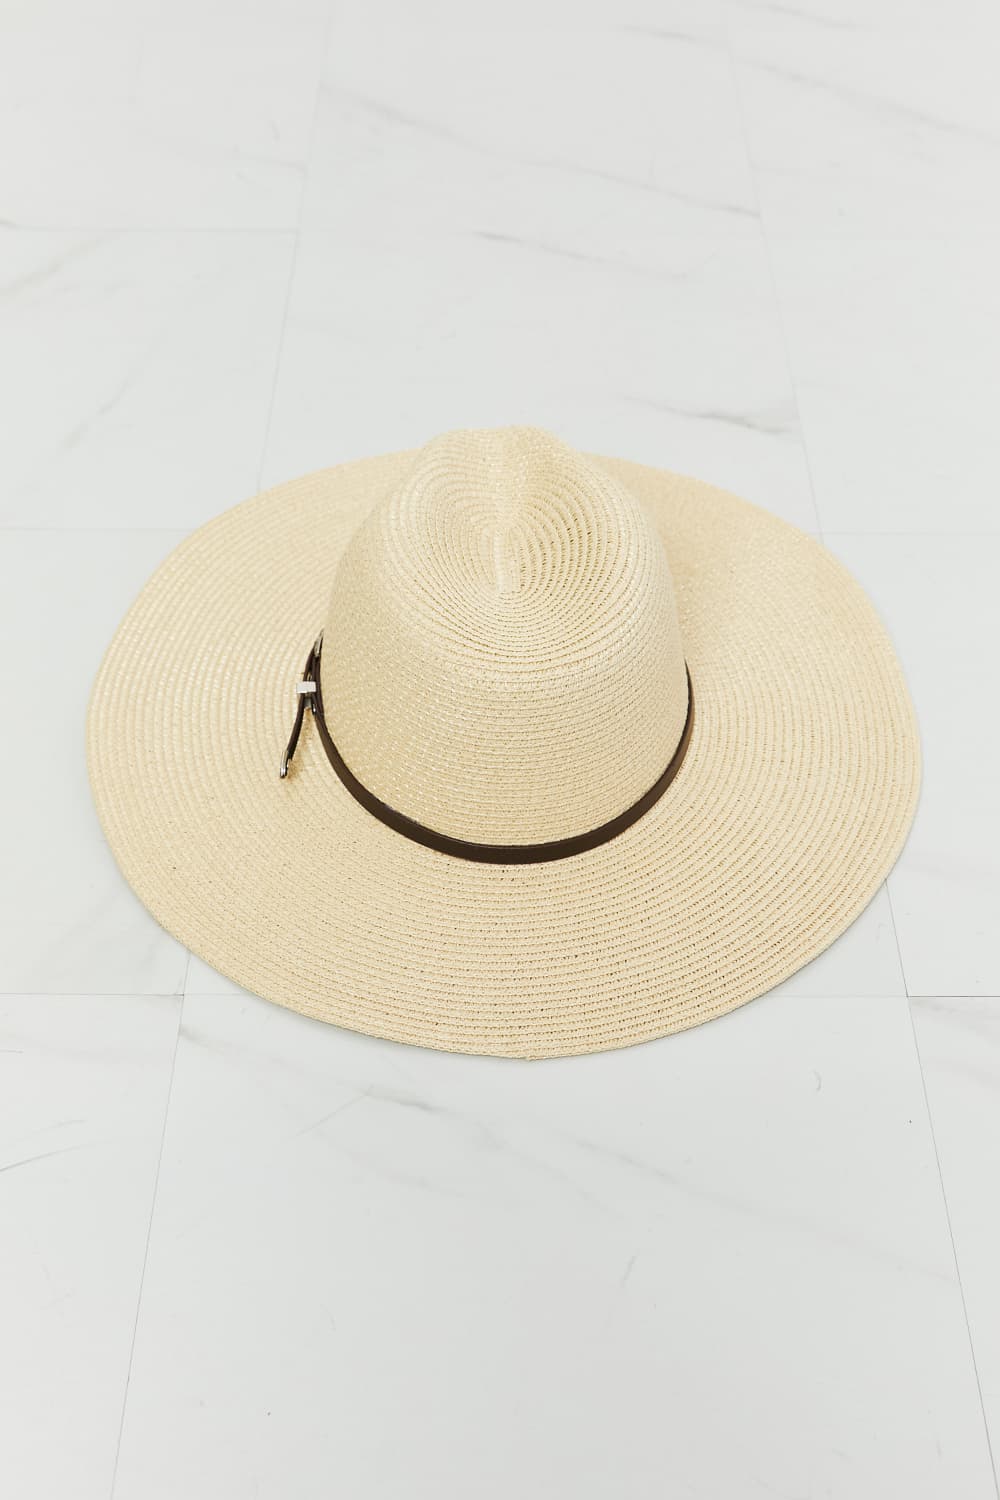 Fame Boho Summer Straw Fedora Hat Hats Trendsi   